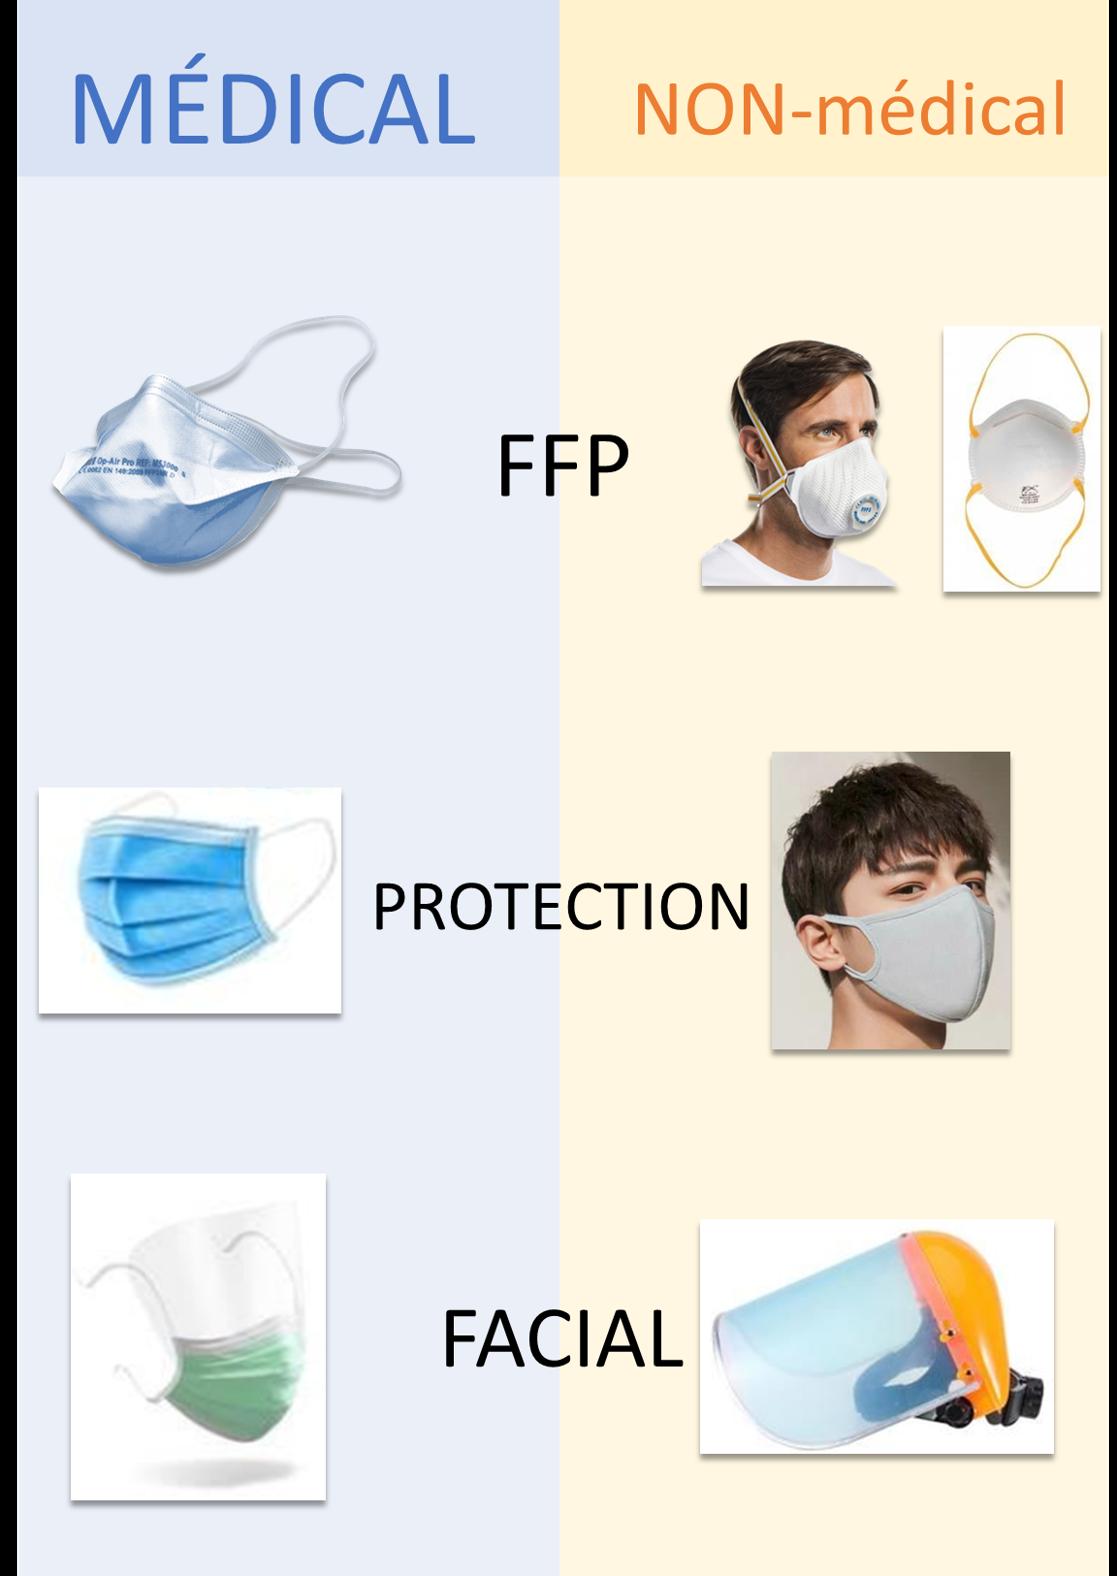 All on polypropylene, recommended for masks against COVVI-19